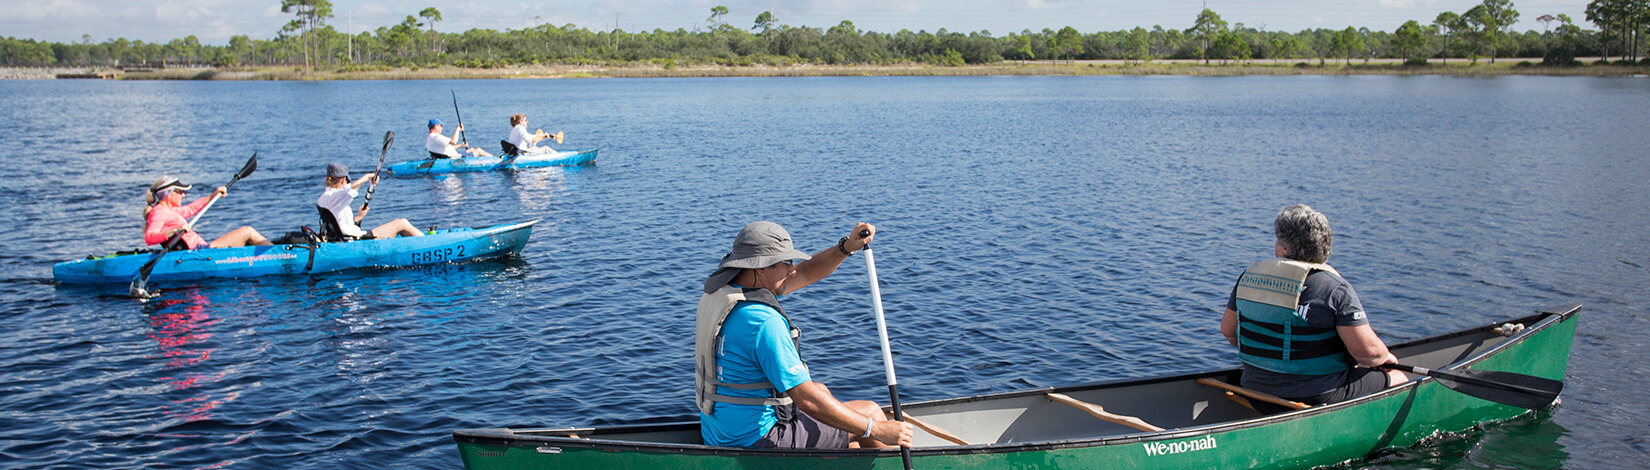 People kayaking and canoeing on a Florida lake.